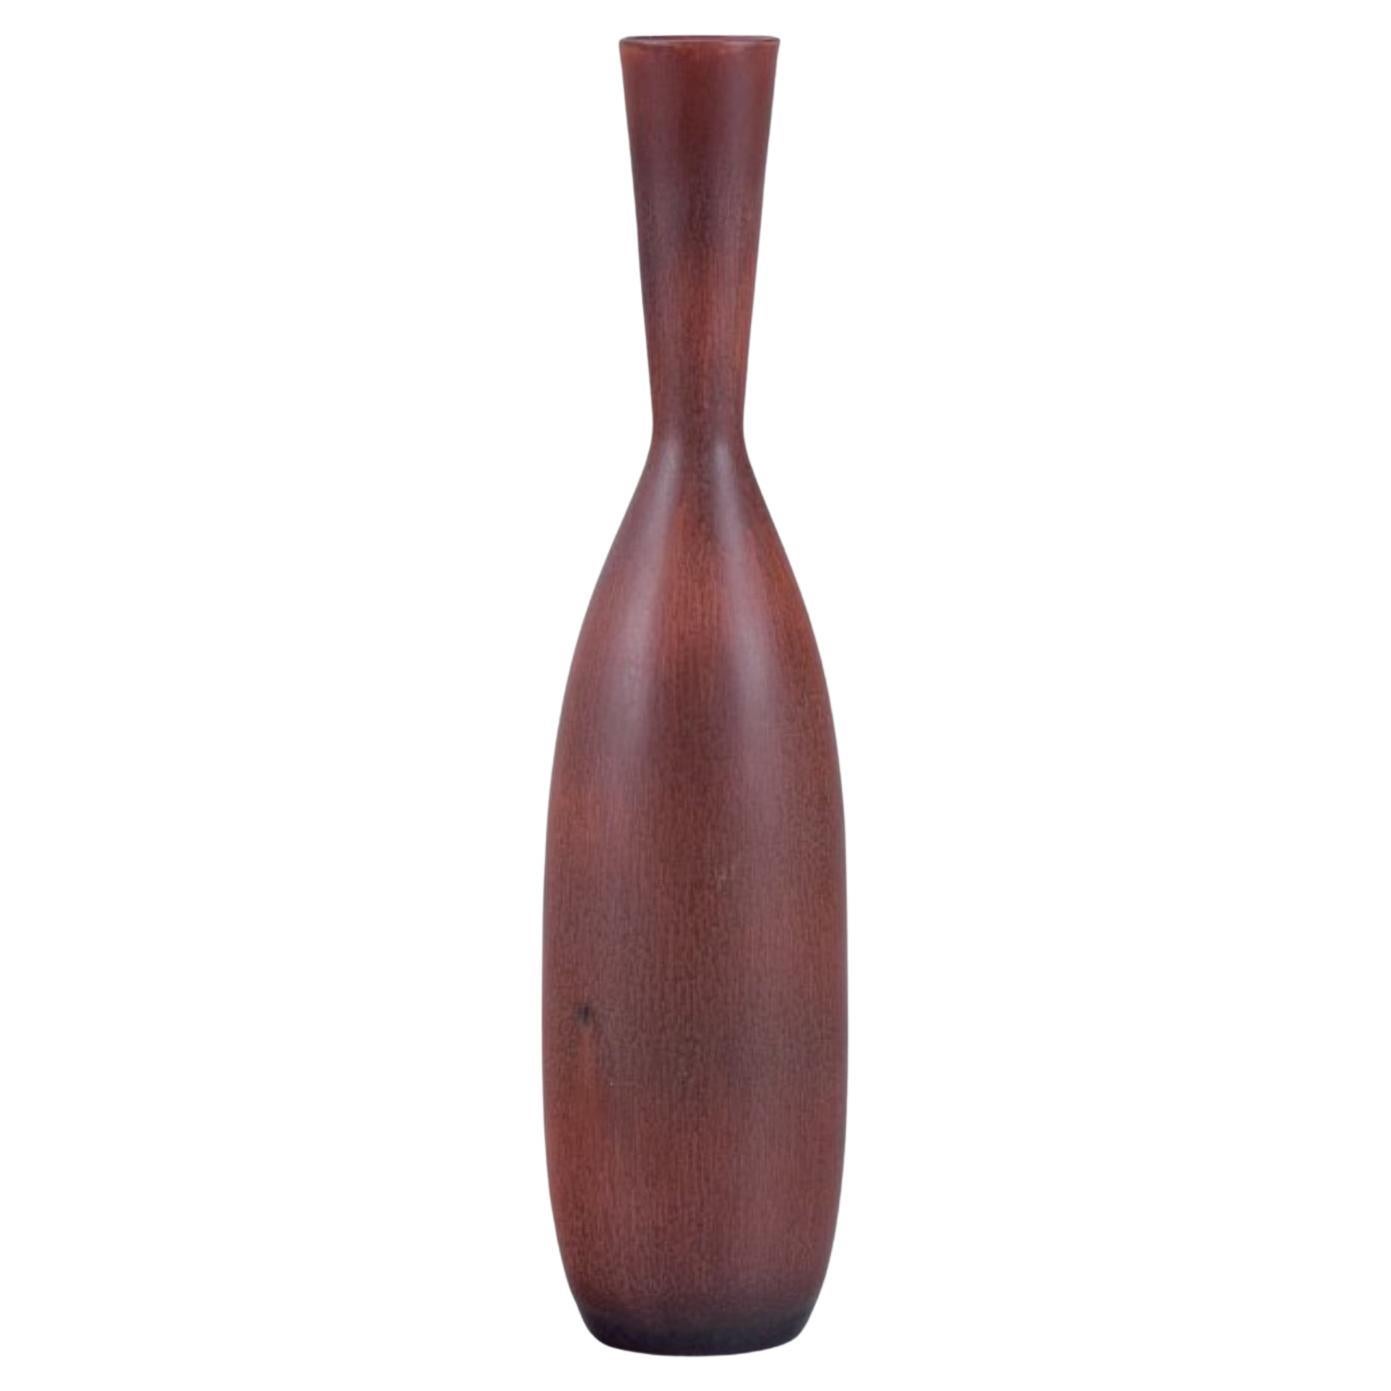 Carl Harry Stålhane for Rörstrand. Large ceramic vase with a slender neck.